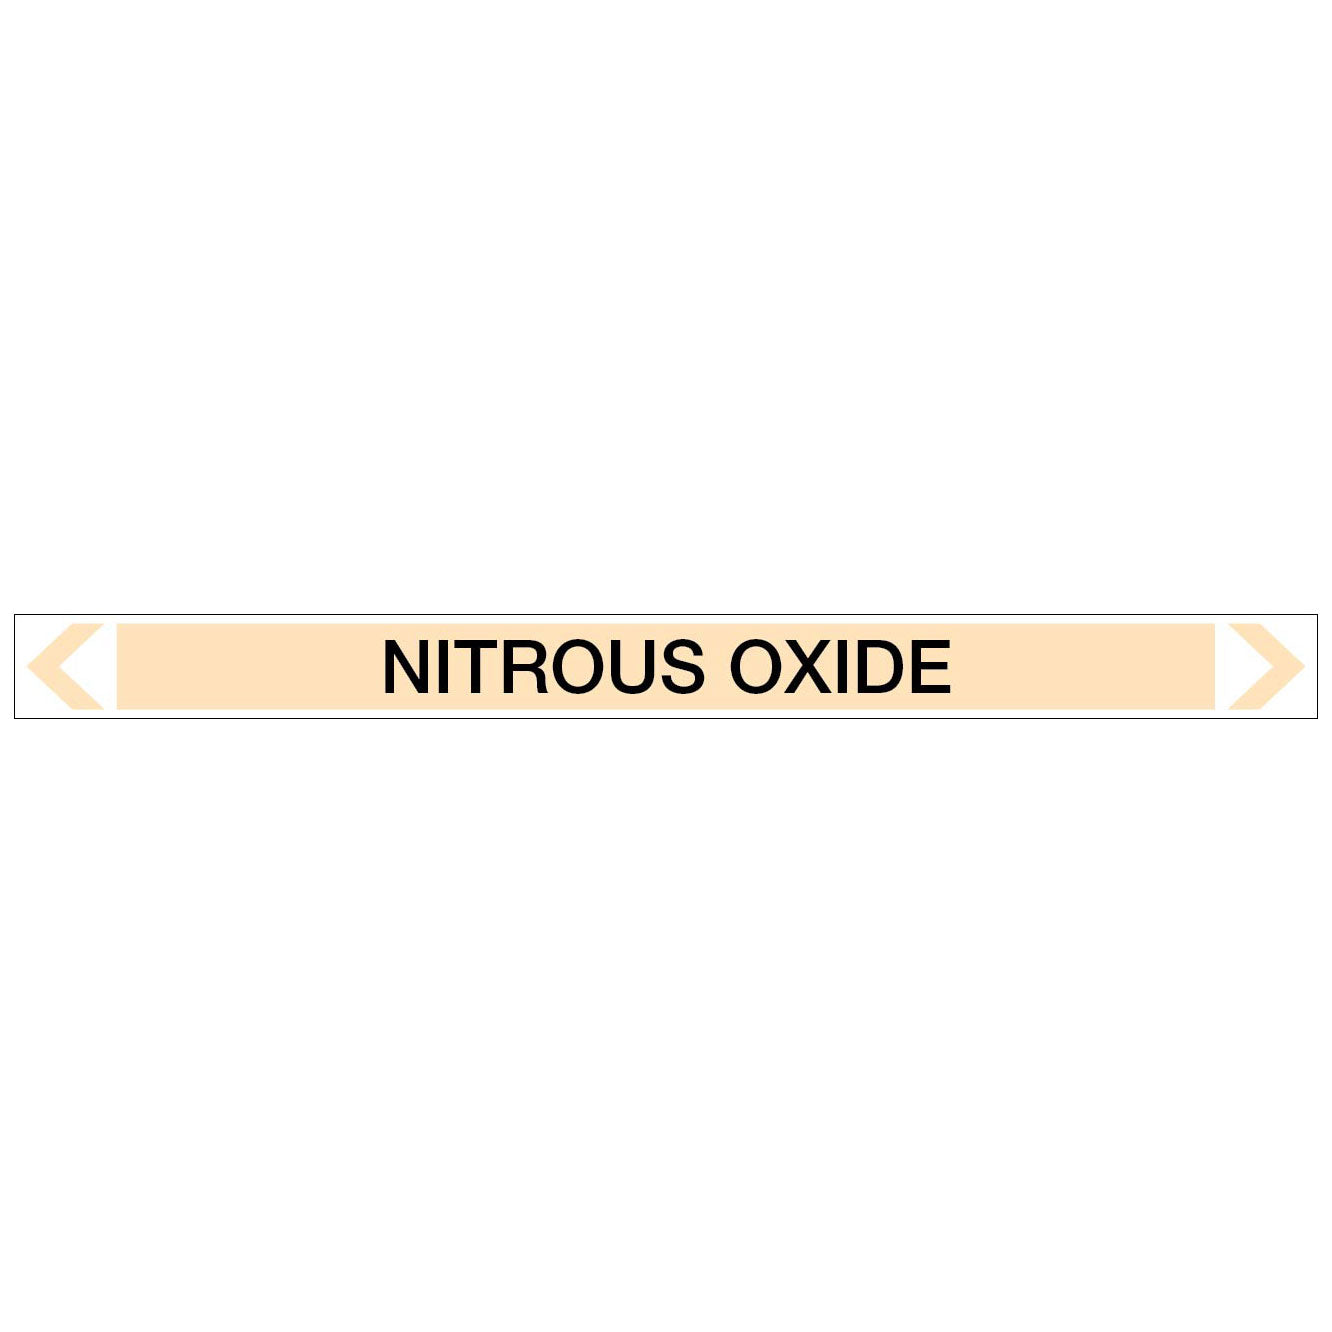 Gases - Nitrous Oxide - Pipe Marker Sticker